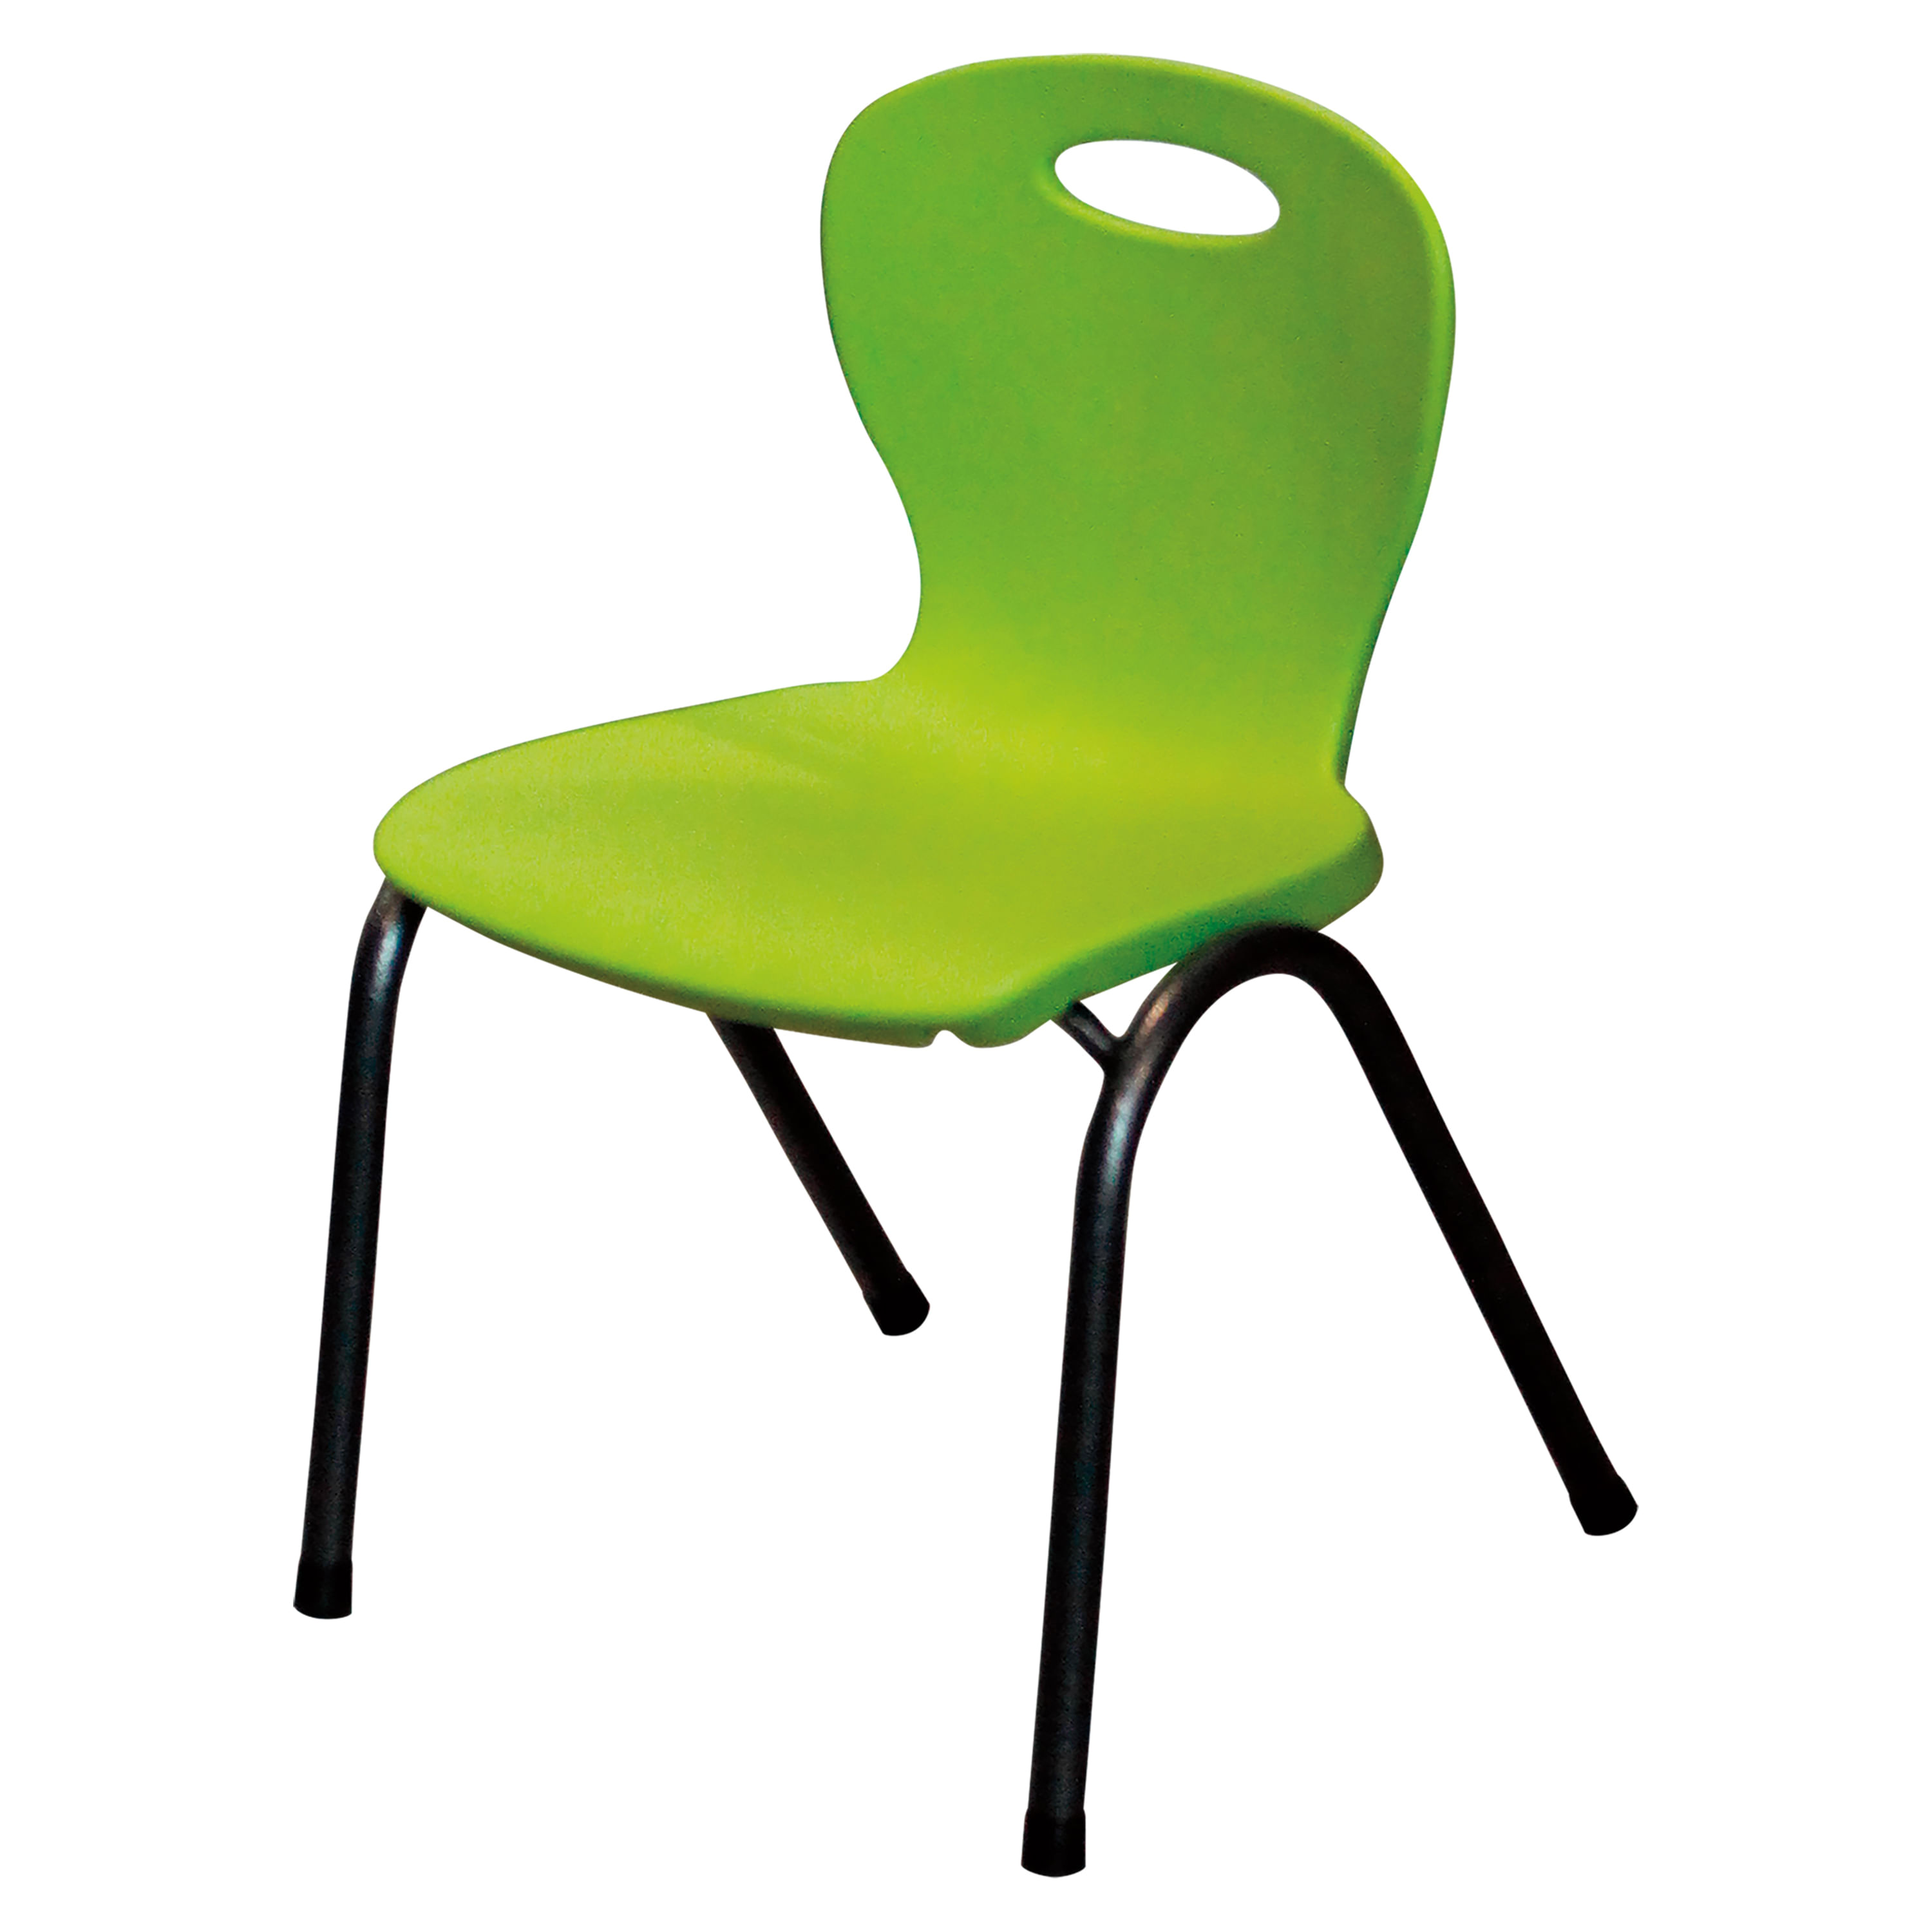 Silla-Plastica-Mainstays-Infantil-Color-Verde-Unidad-1-6276